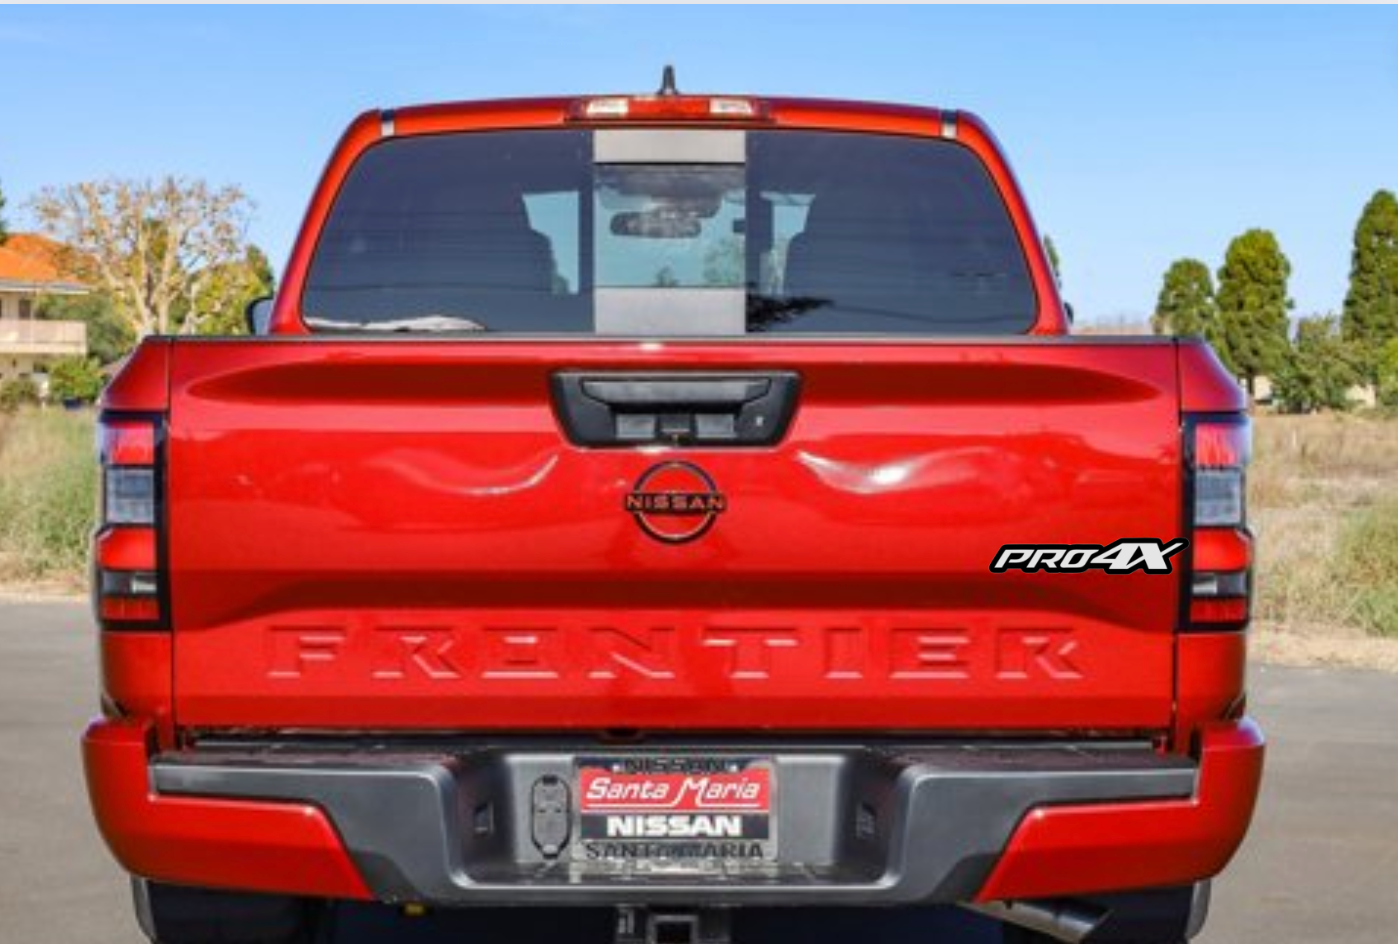 Nissan tailgate trunk rear emblem with PRO4X logo